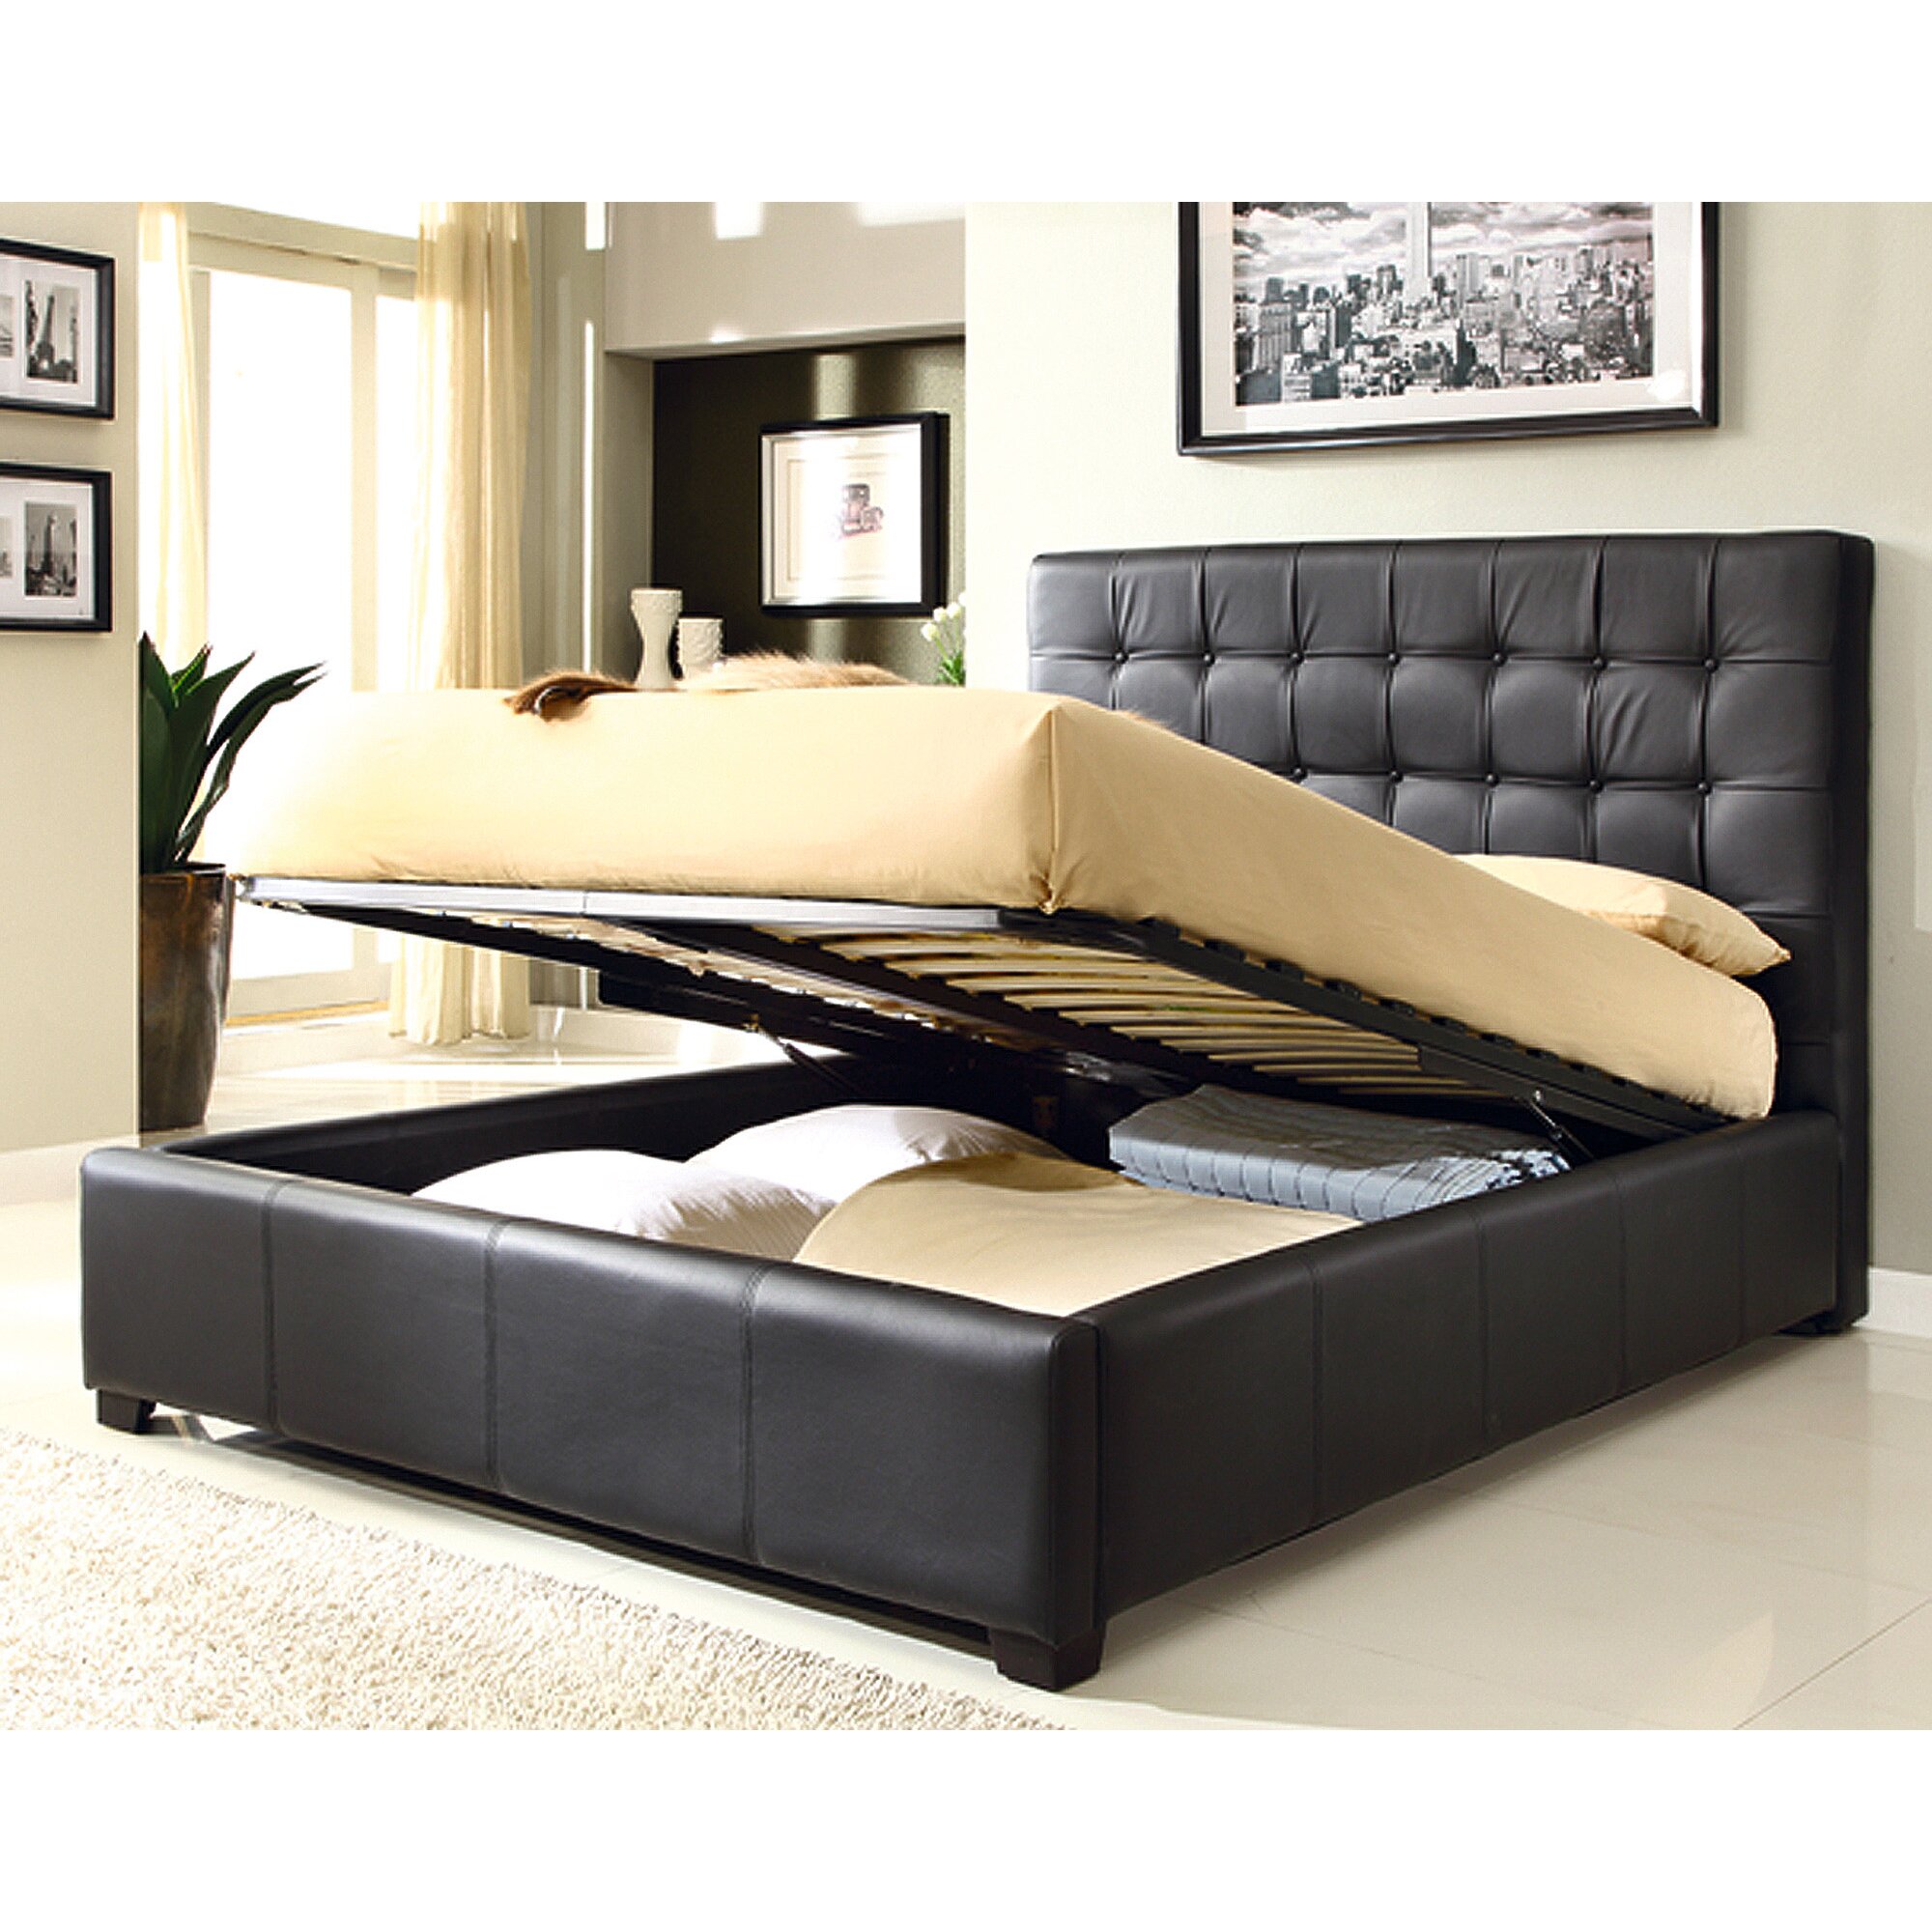 At Home USA Athens Upholstered Storage Platform Bed & Reviews | Wayfair